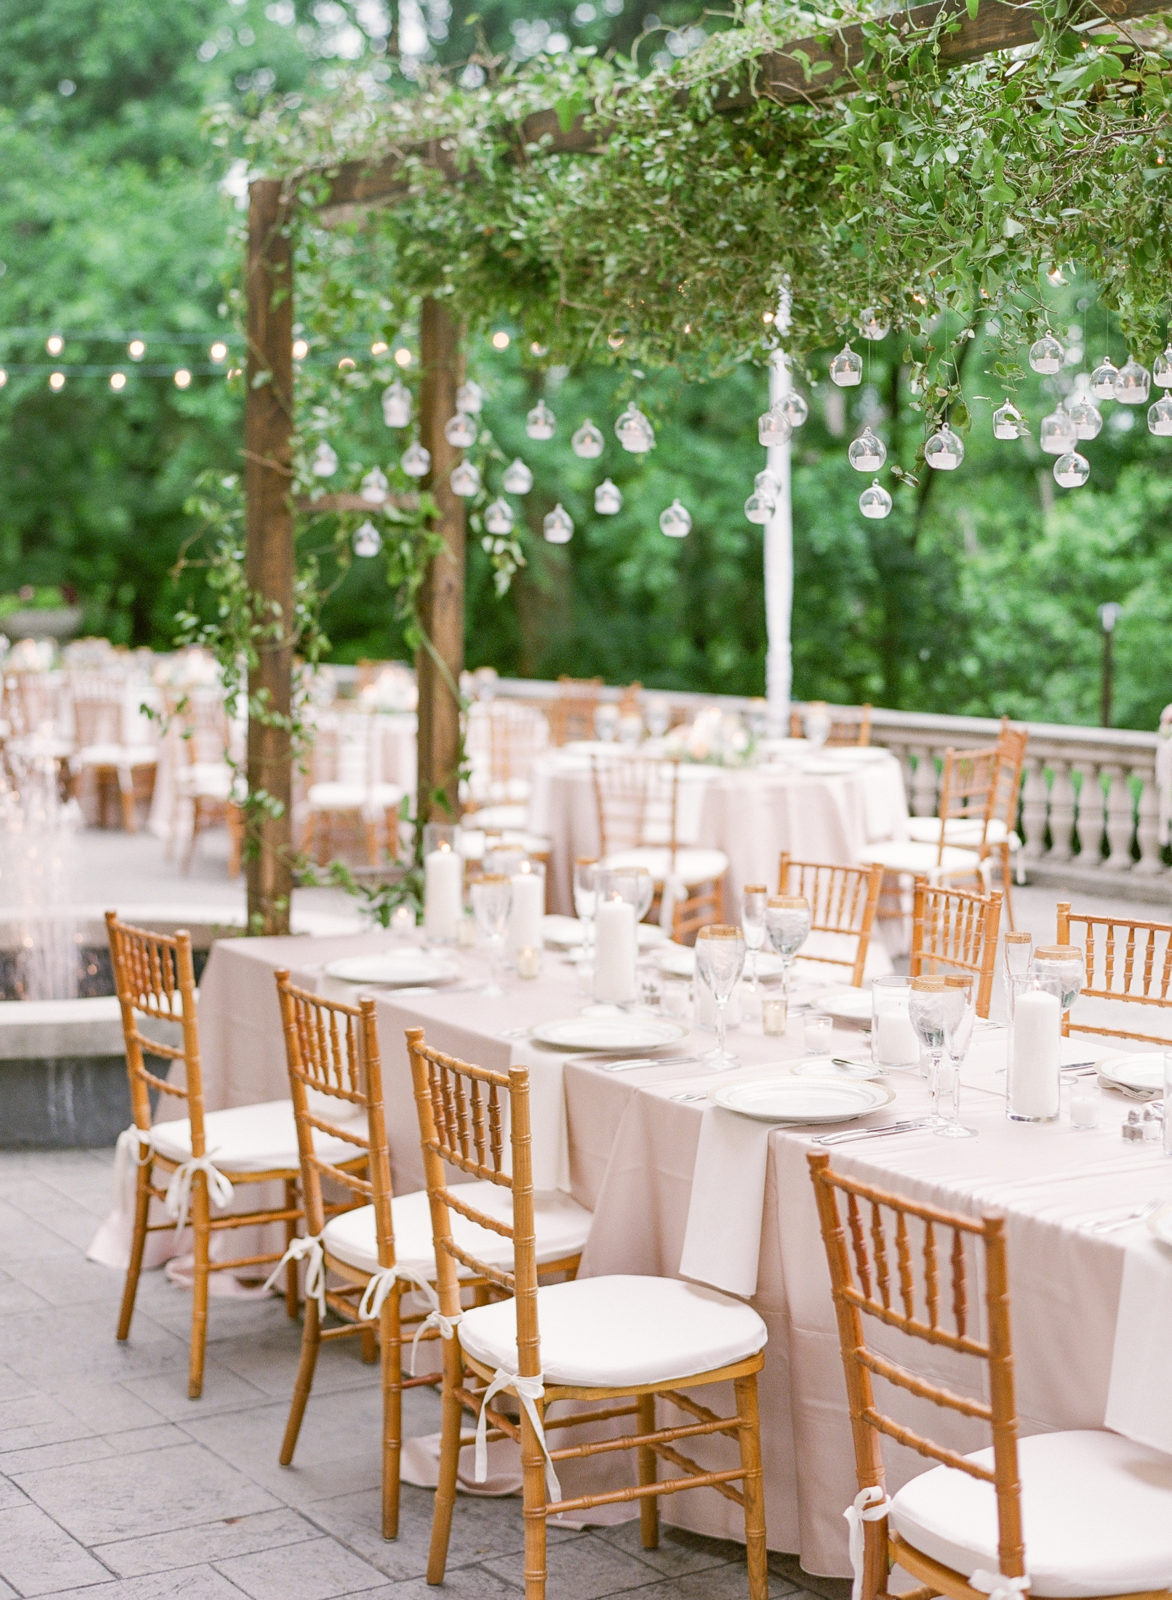 Laurel Hall Wedding Photos | Molly Carr Photography | Fine Art Film Photographer | Chicago Wedding | Summer Garden Party Wedding | European Wedding Inspiration | Outdoor Wedding Reception